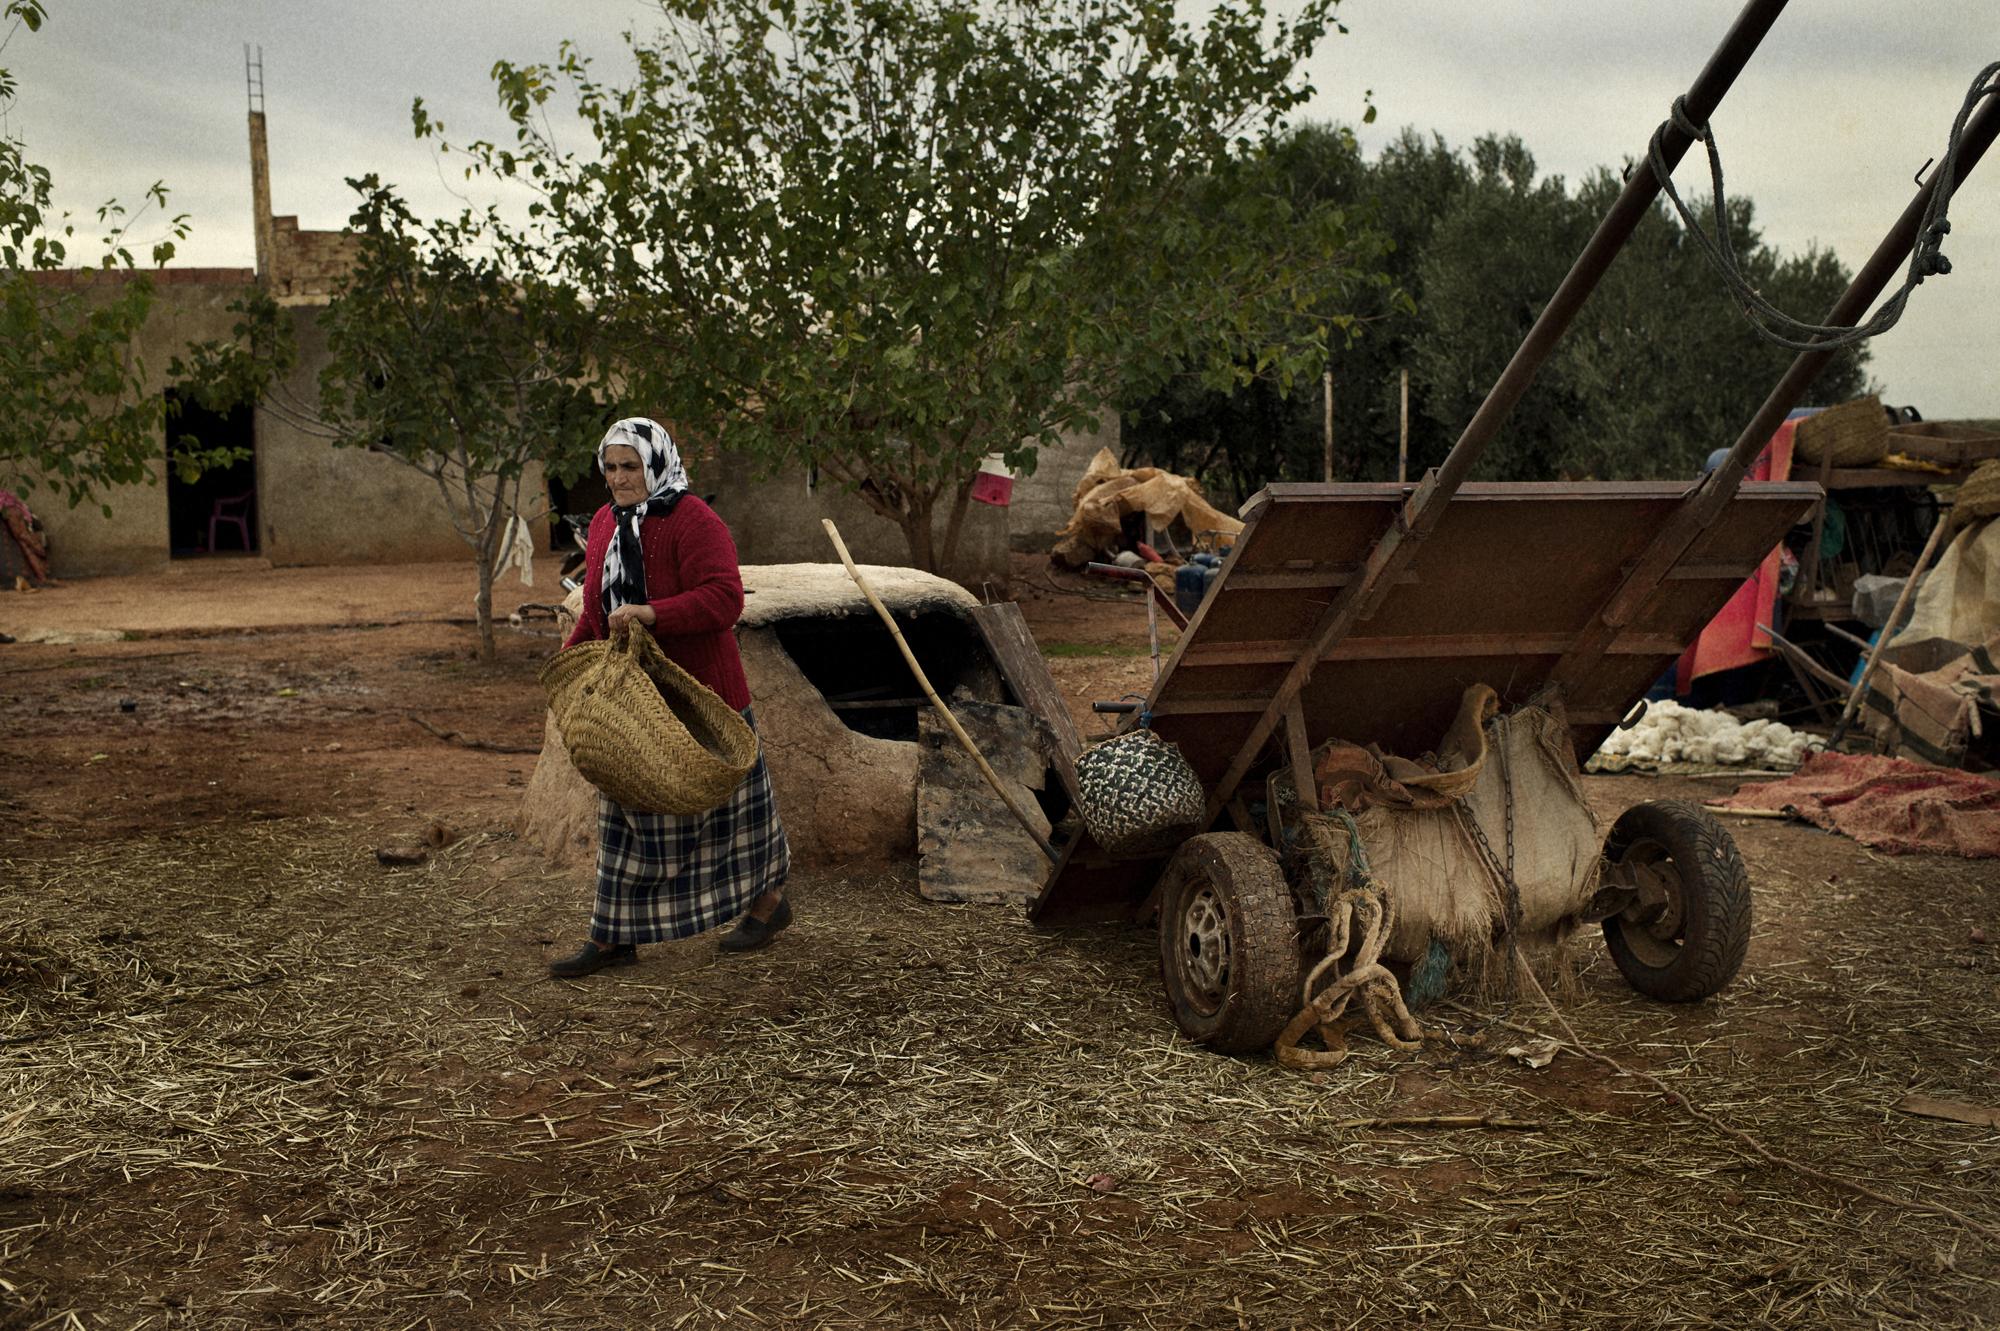 Microcredit / Morocco - Morocco, Ainmaarouf. November 2011.
Kanza Elbouk is...